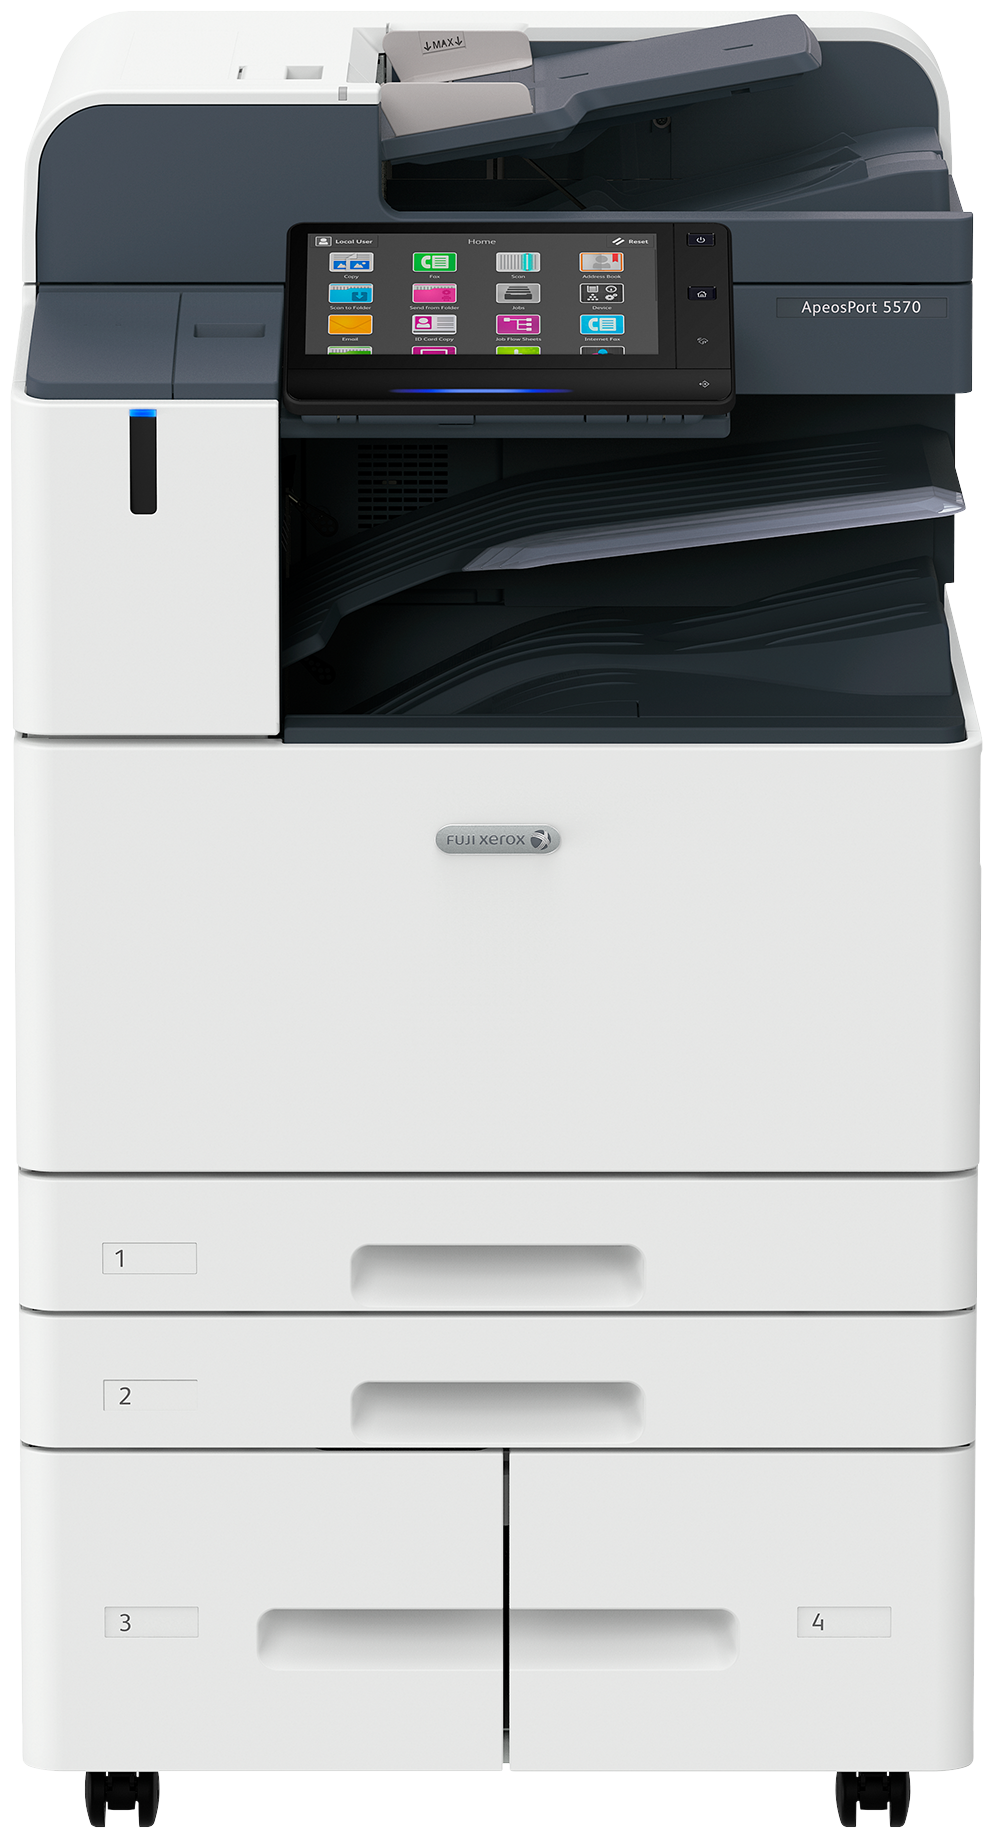 New multifunction printer